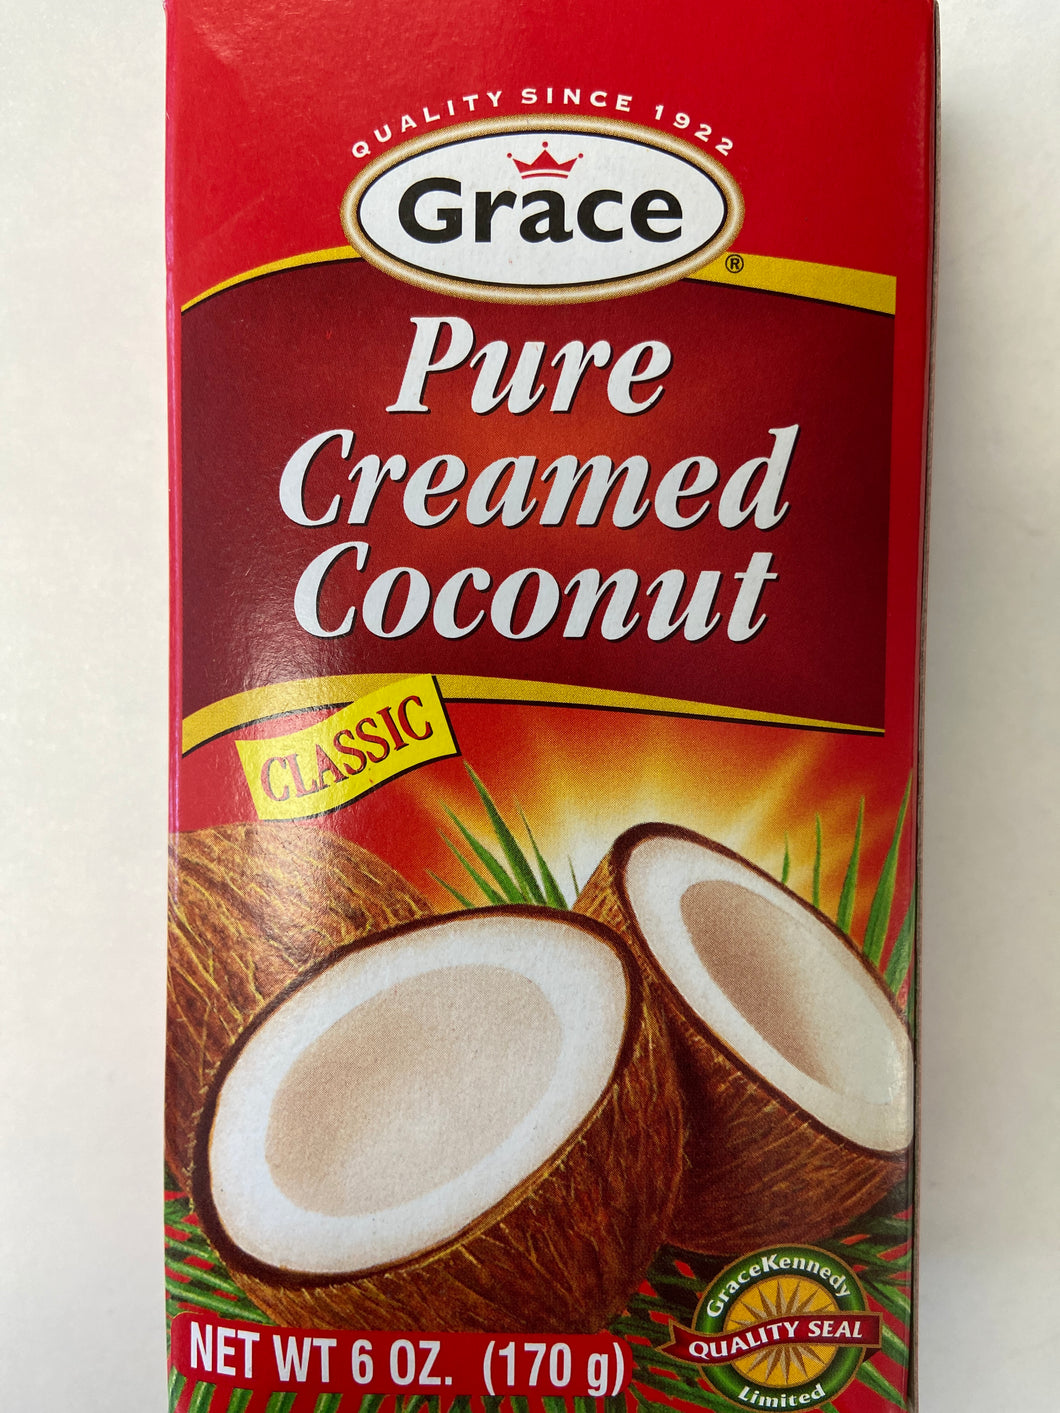 Pure Creamed Coconut, Classic, Grace